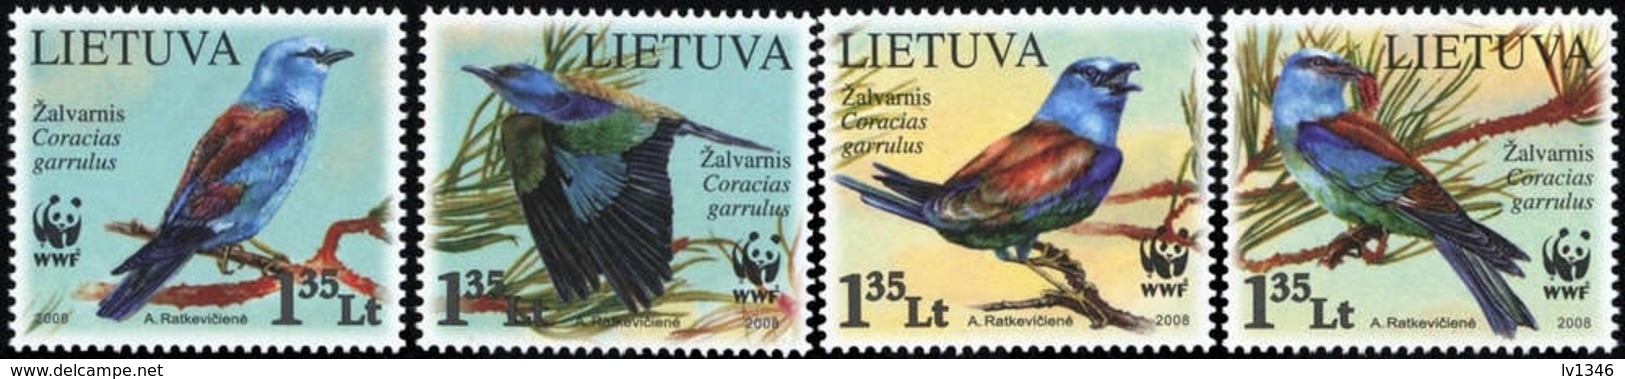 Li1 Lietuva Birds WWF 2008 MNH-neuf - Lithuania